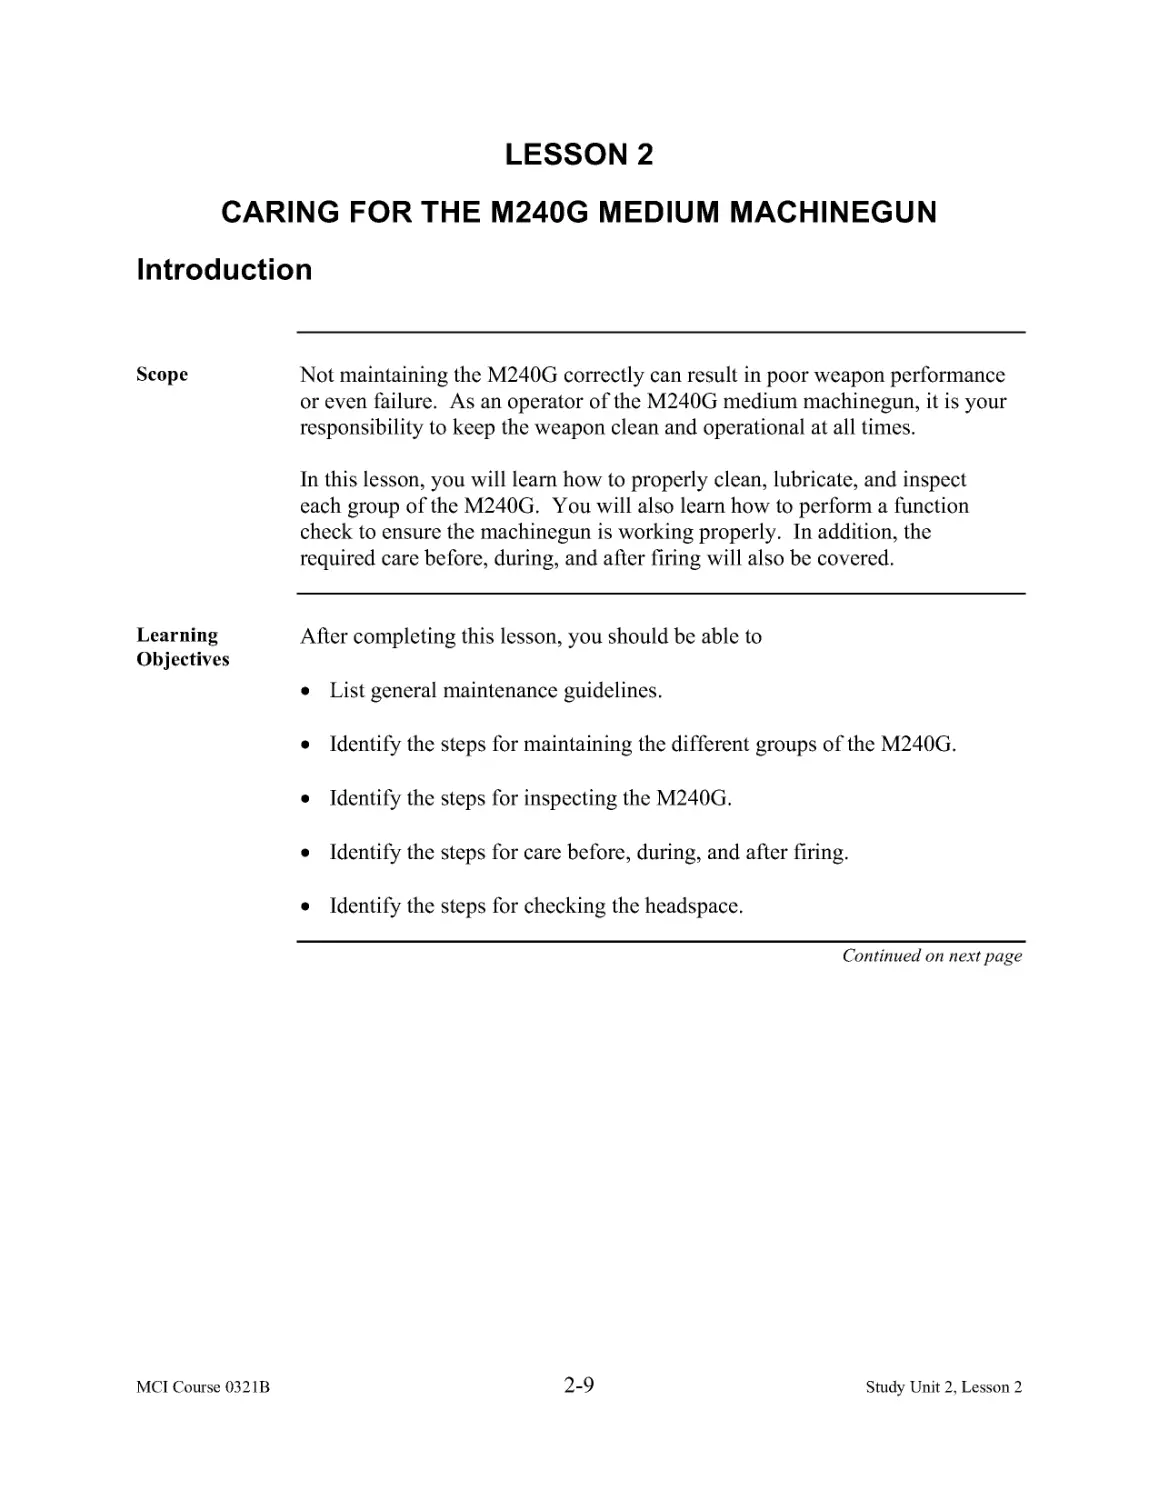 Lesson 2:  Caring for the M240G Medium Machinegun